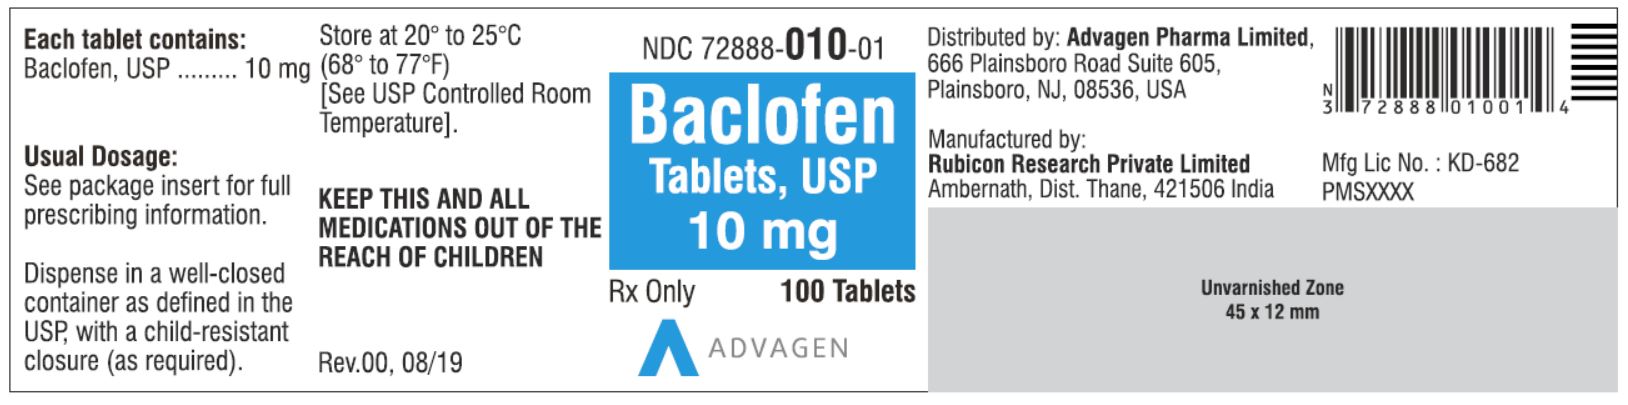 NDC 72888-010-01 - Baclofen Tablets, USP 10 mg - 100 Tablets